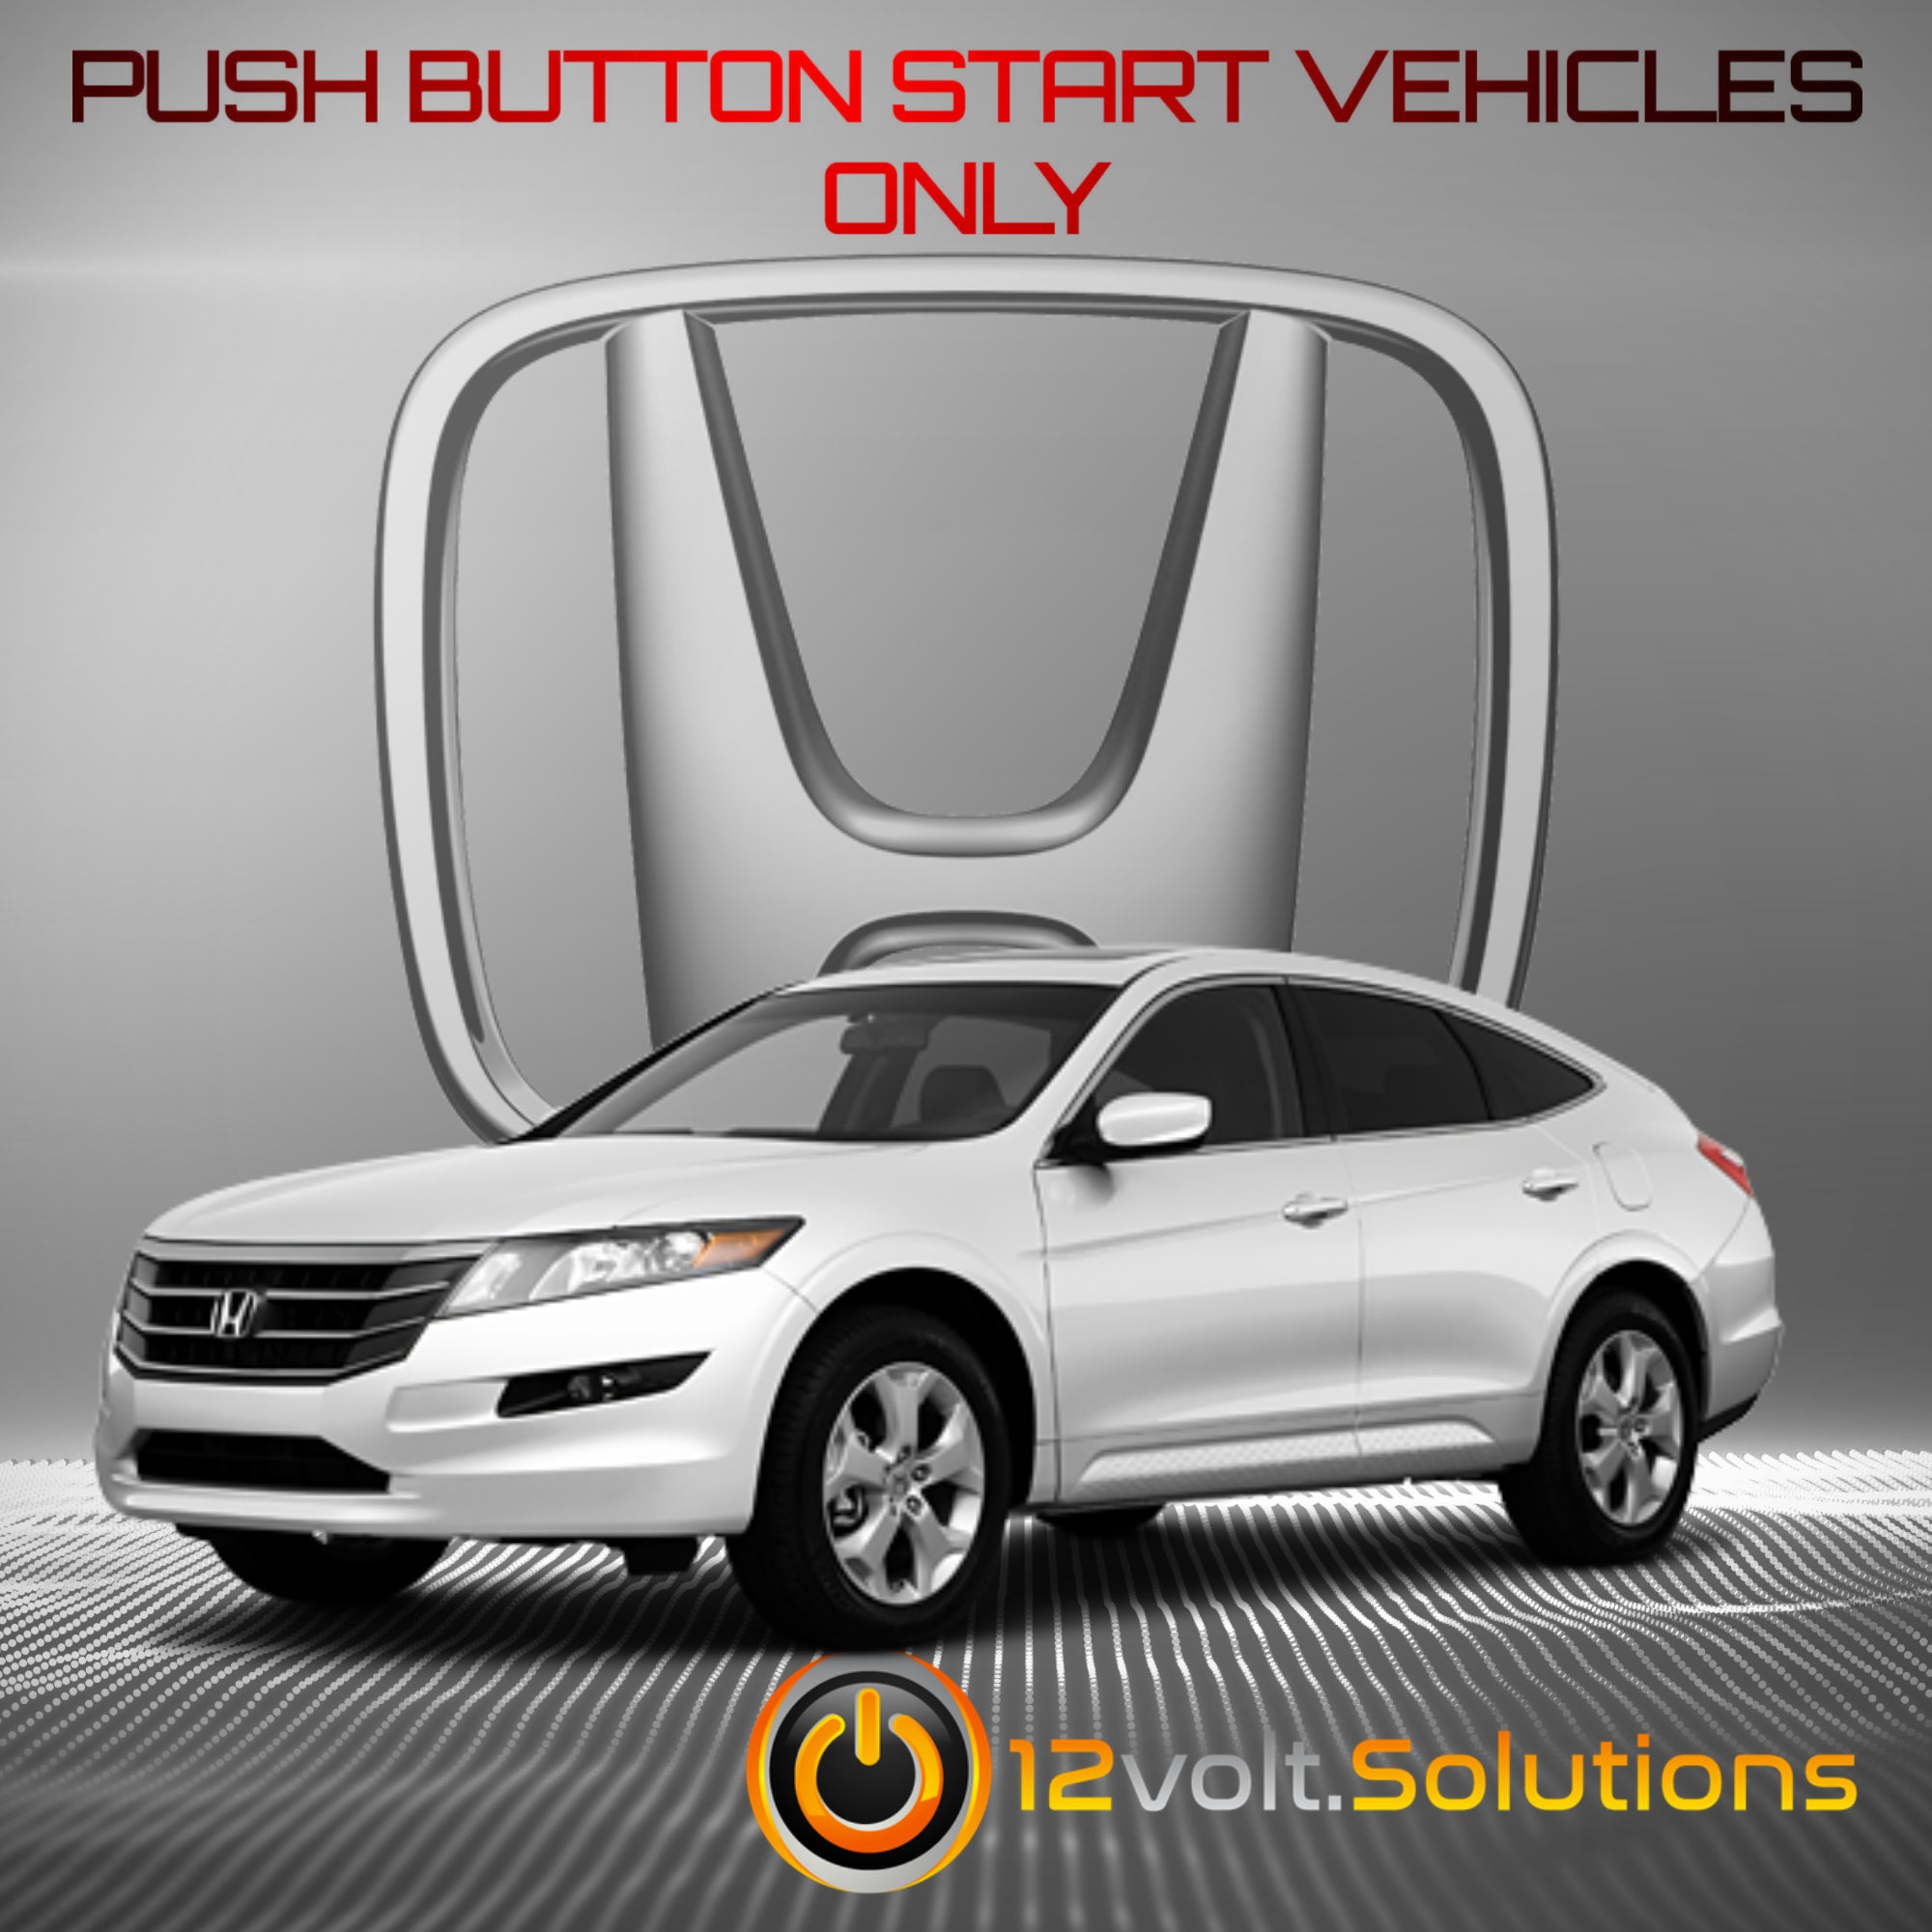 2013-2015 Honda Accord Crosstour Plug & Play Remote Start Kit (Push Button Start)-12Volt.Solutions